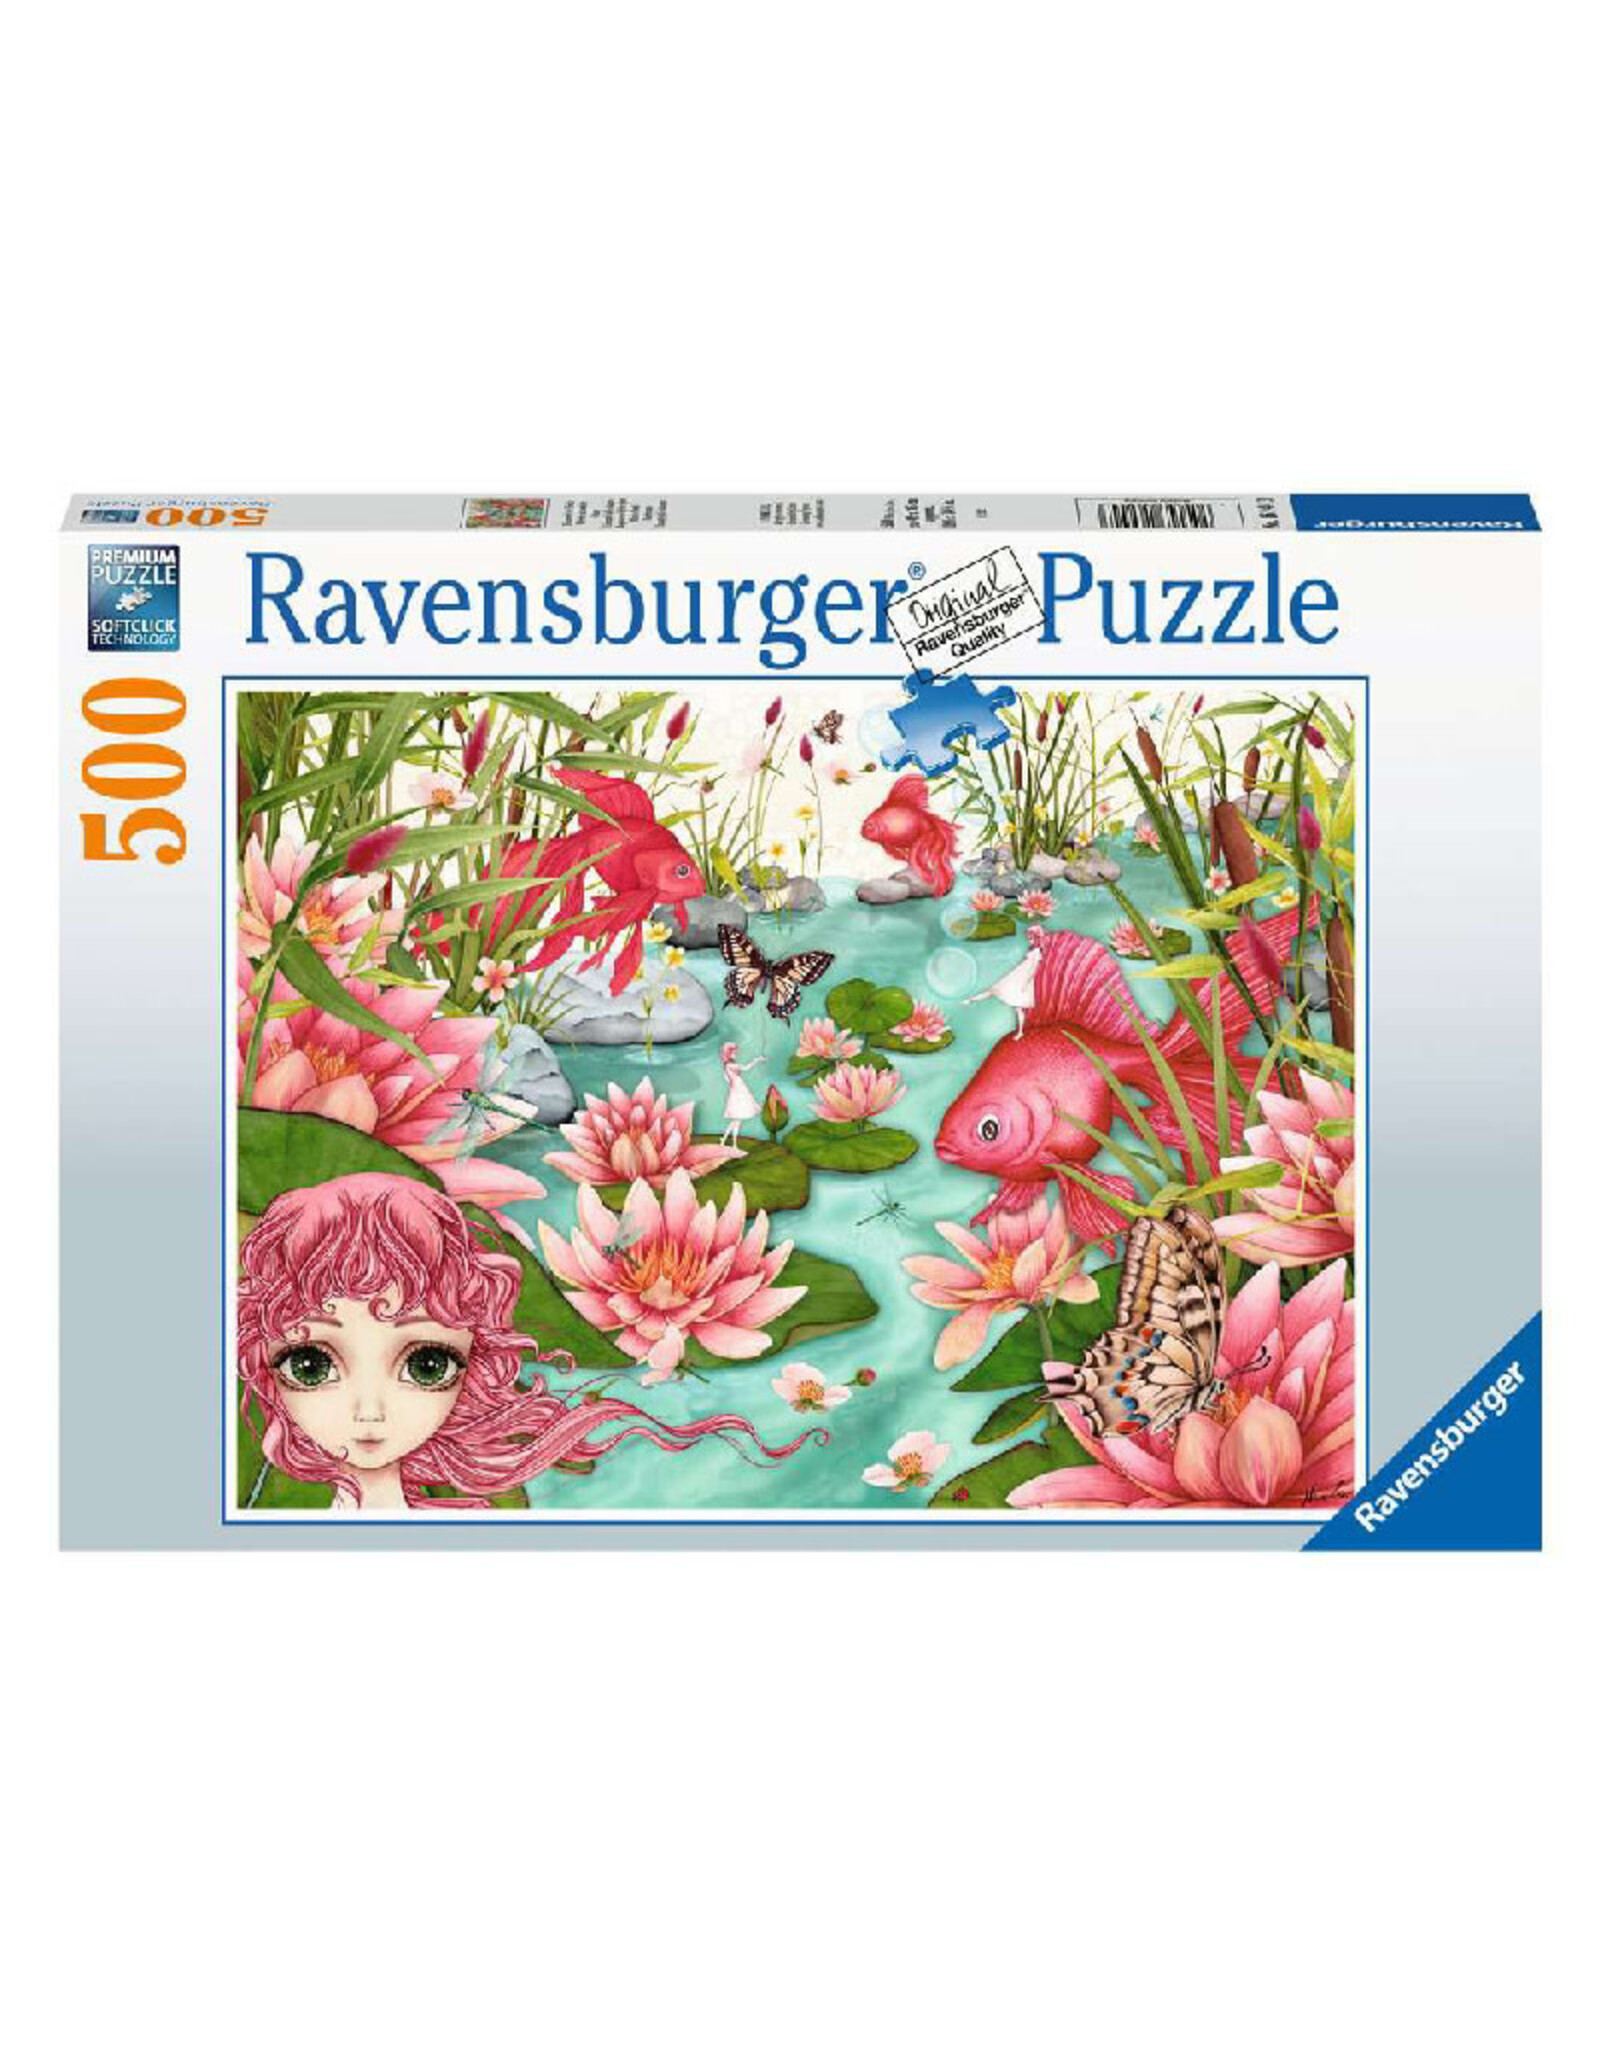 Ravensburger Minu's Pond Daydreams Puzzle (500 PCS)